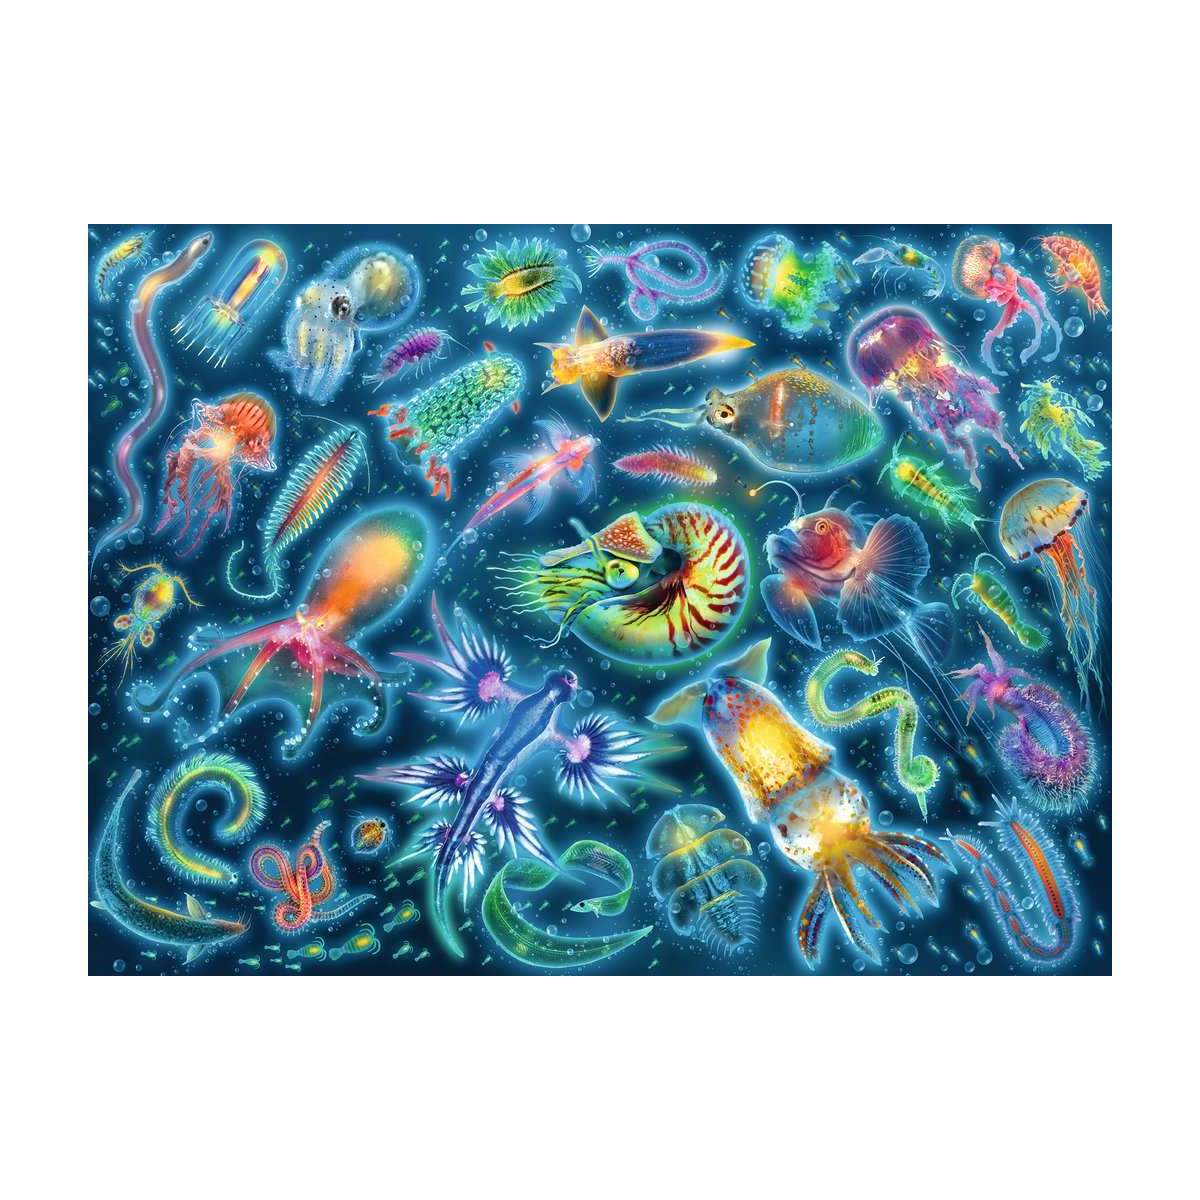 Jellyfish Farbenfrohe - 500 brikker